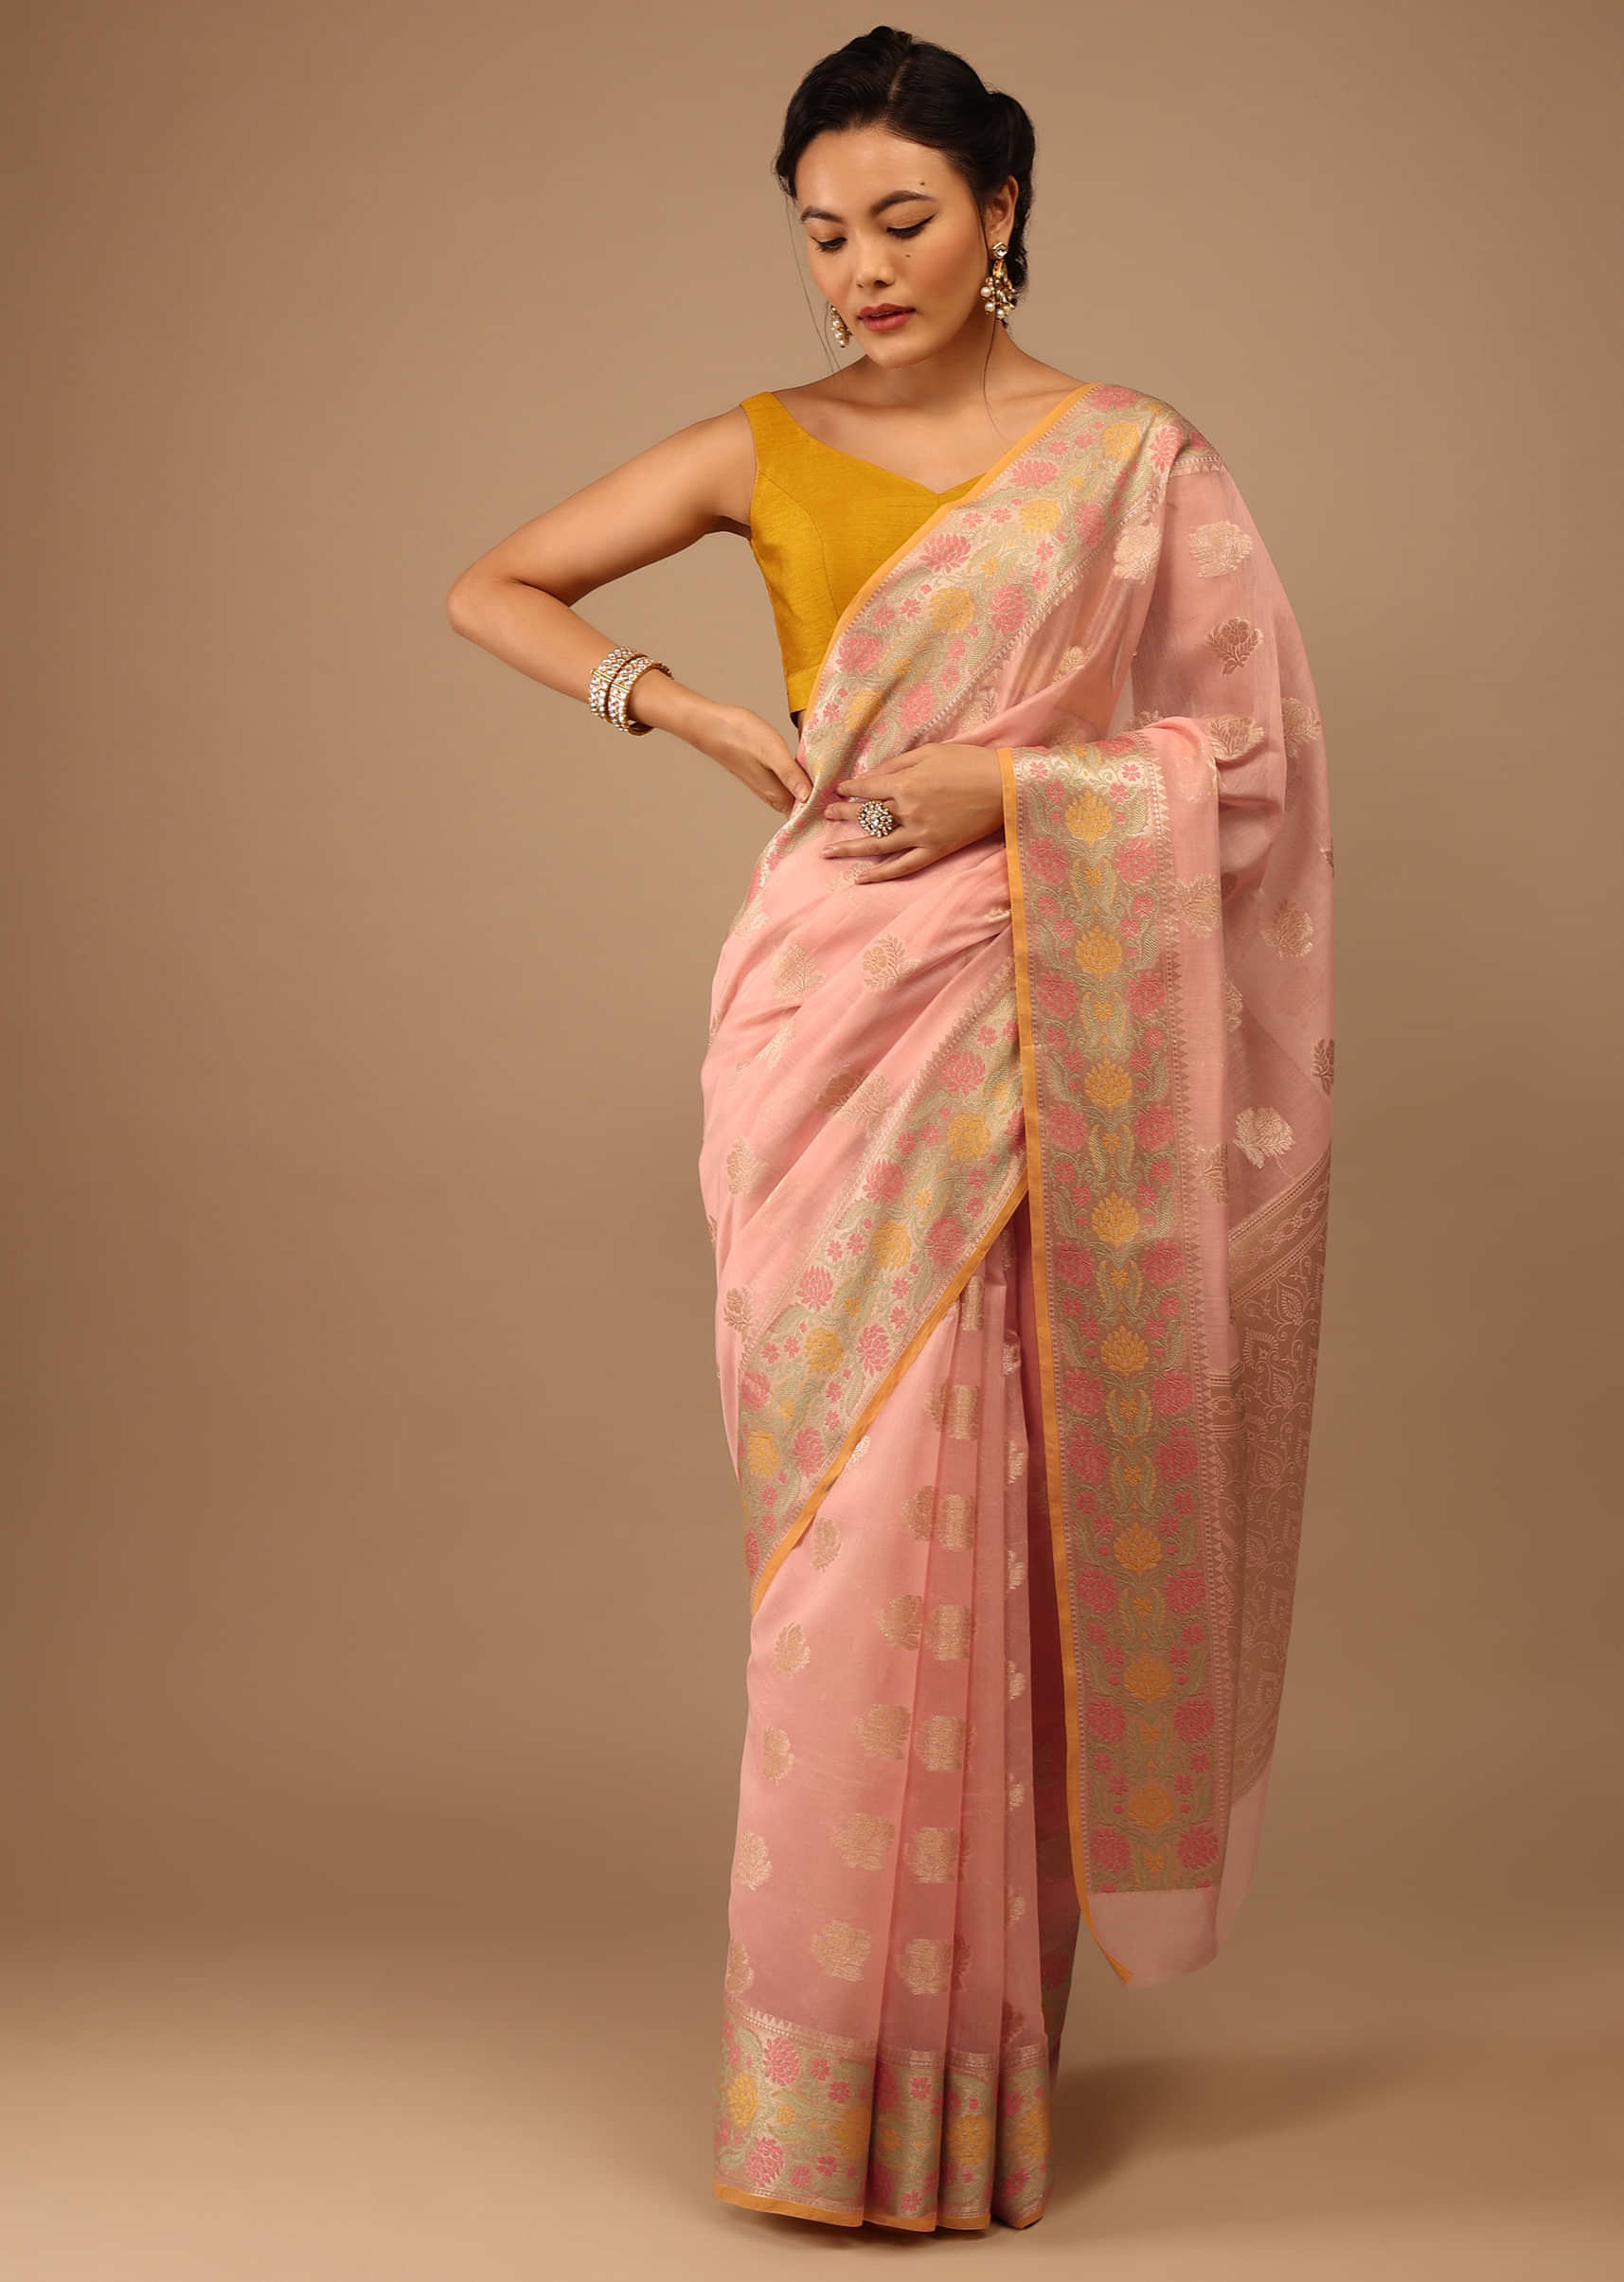 Quartz Pink Saree In Banarsi Chanderi And Pure Handloom Cotton